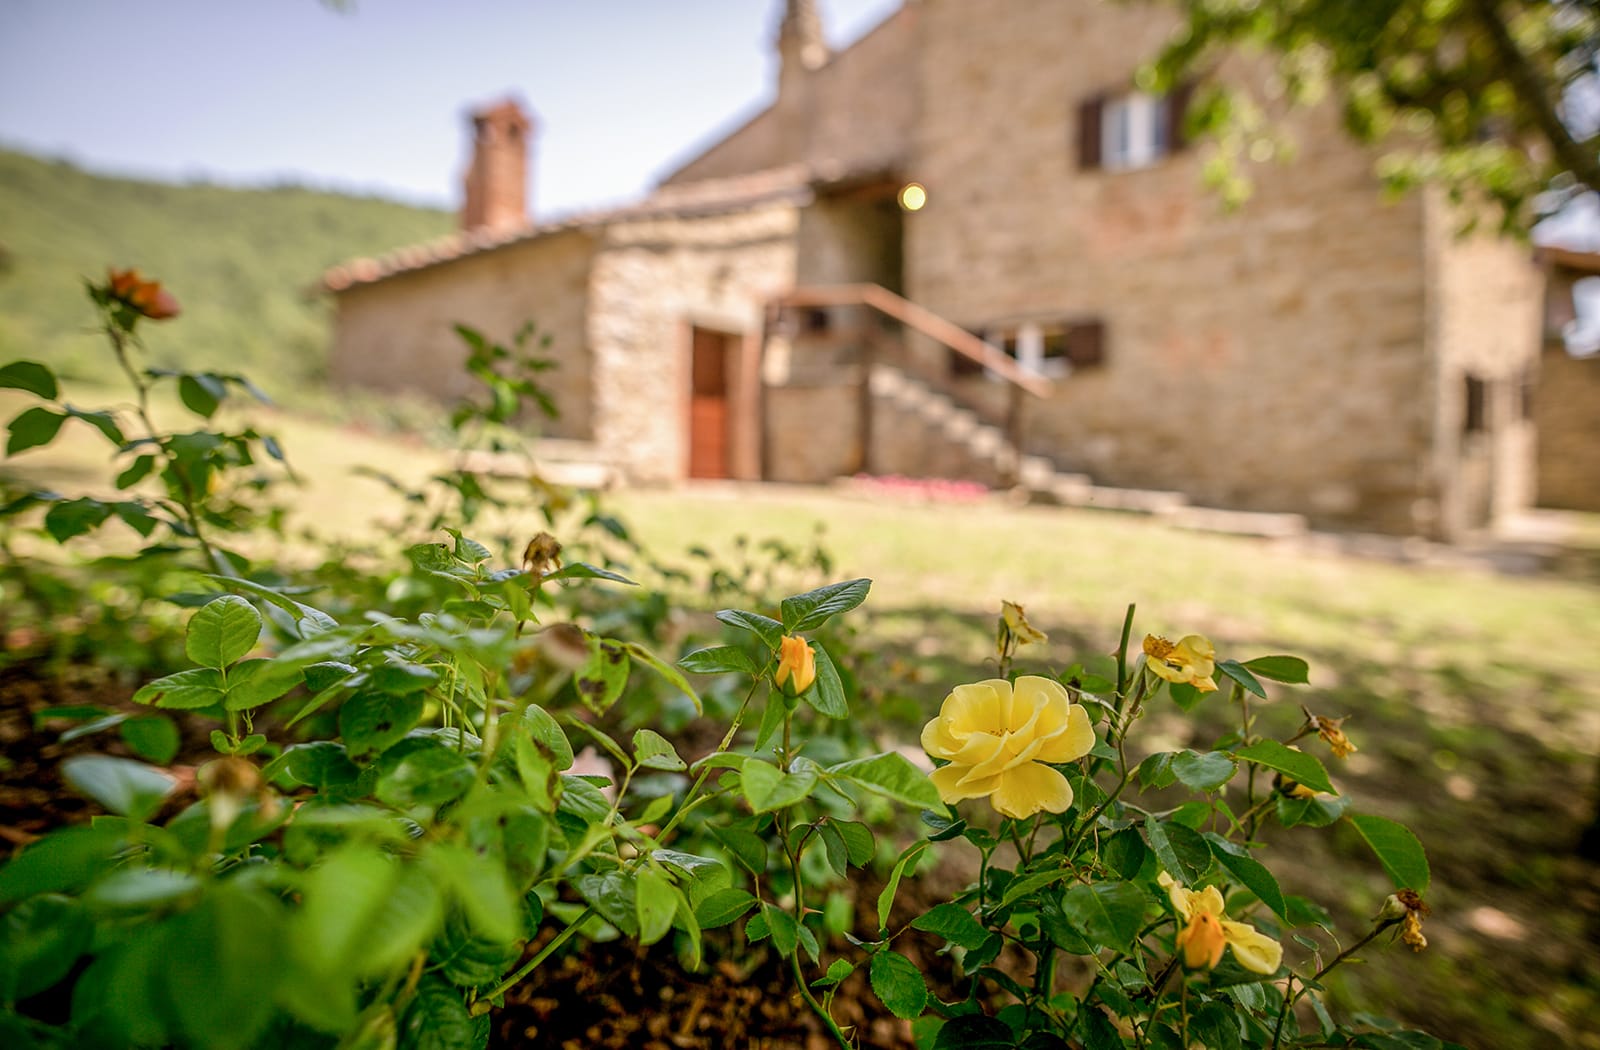 Book your holiday in Tuscany in a beautiful Agriturismo in Cortona and Castiglion Fiorentino